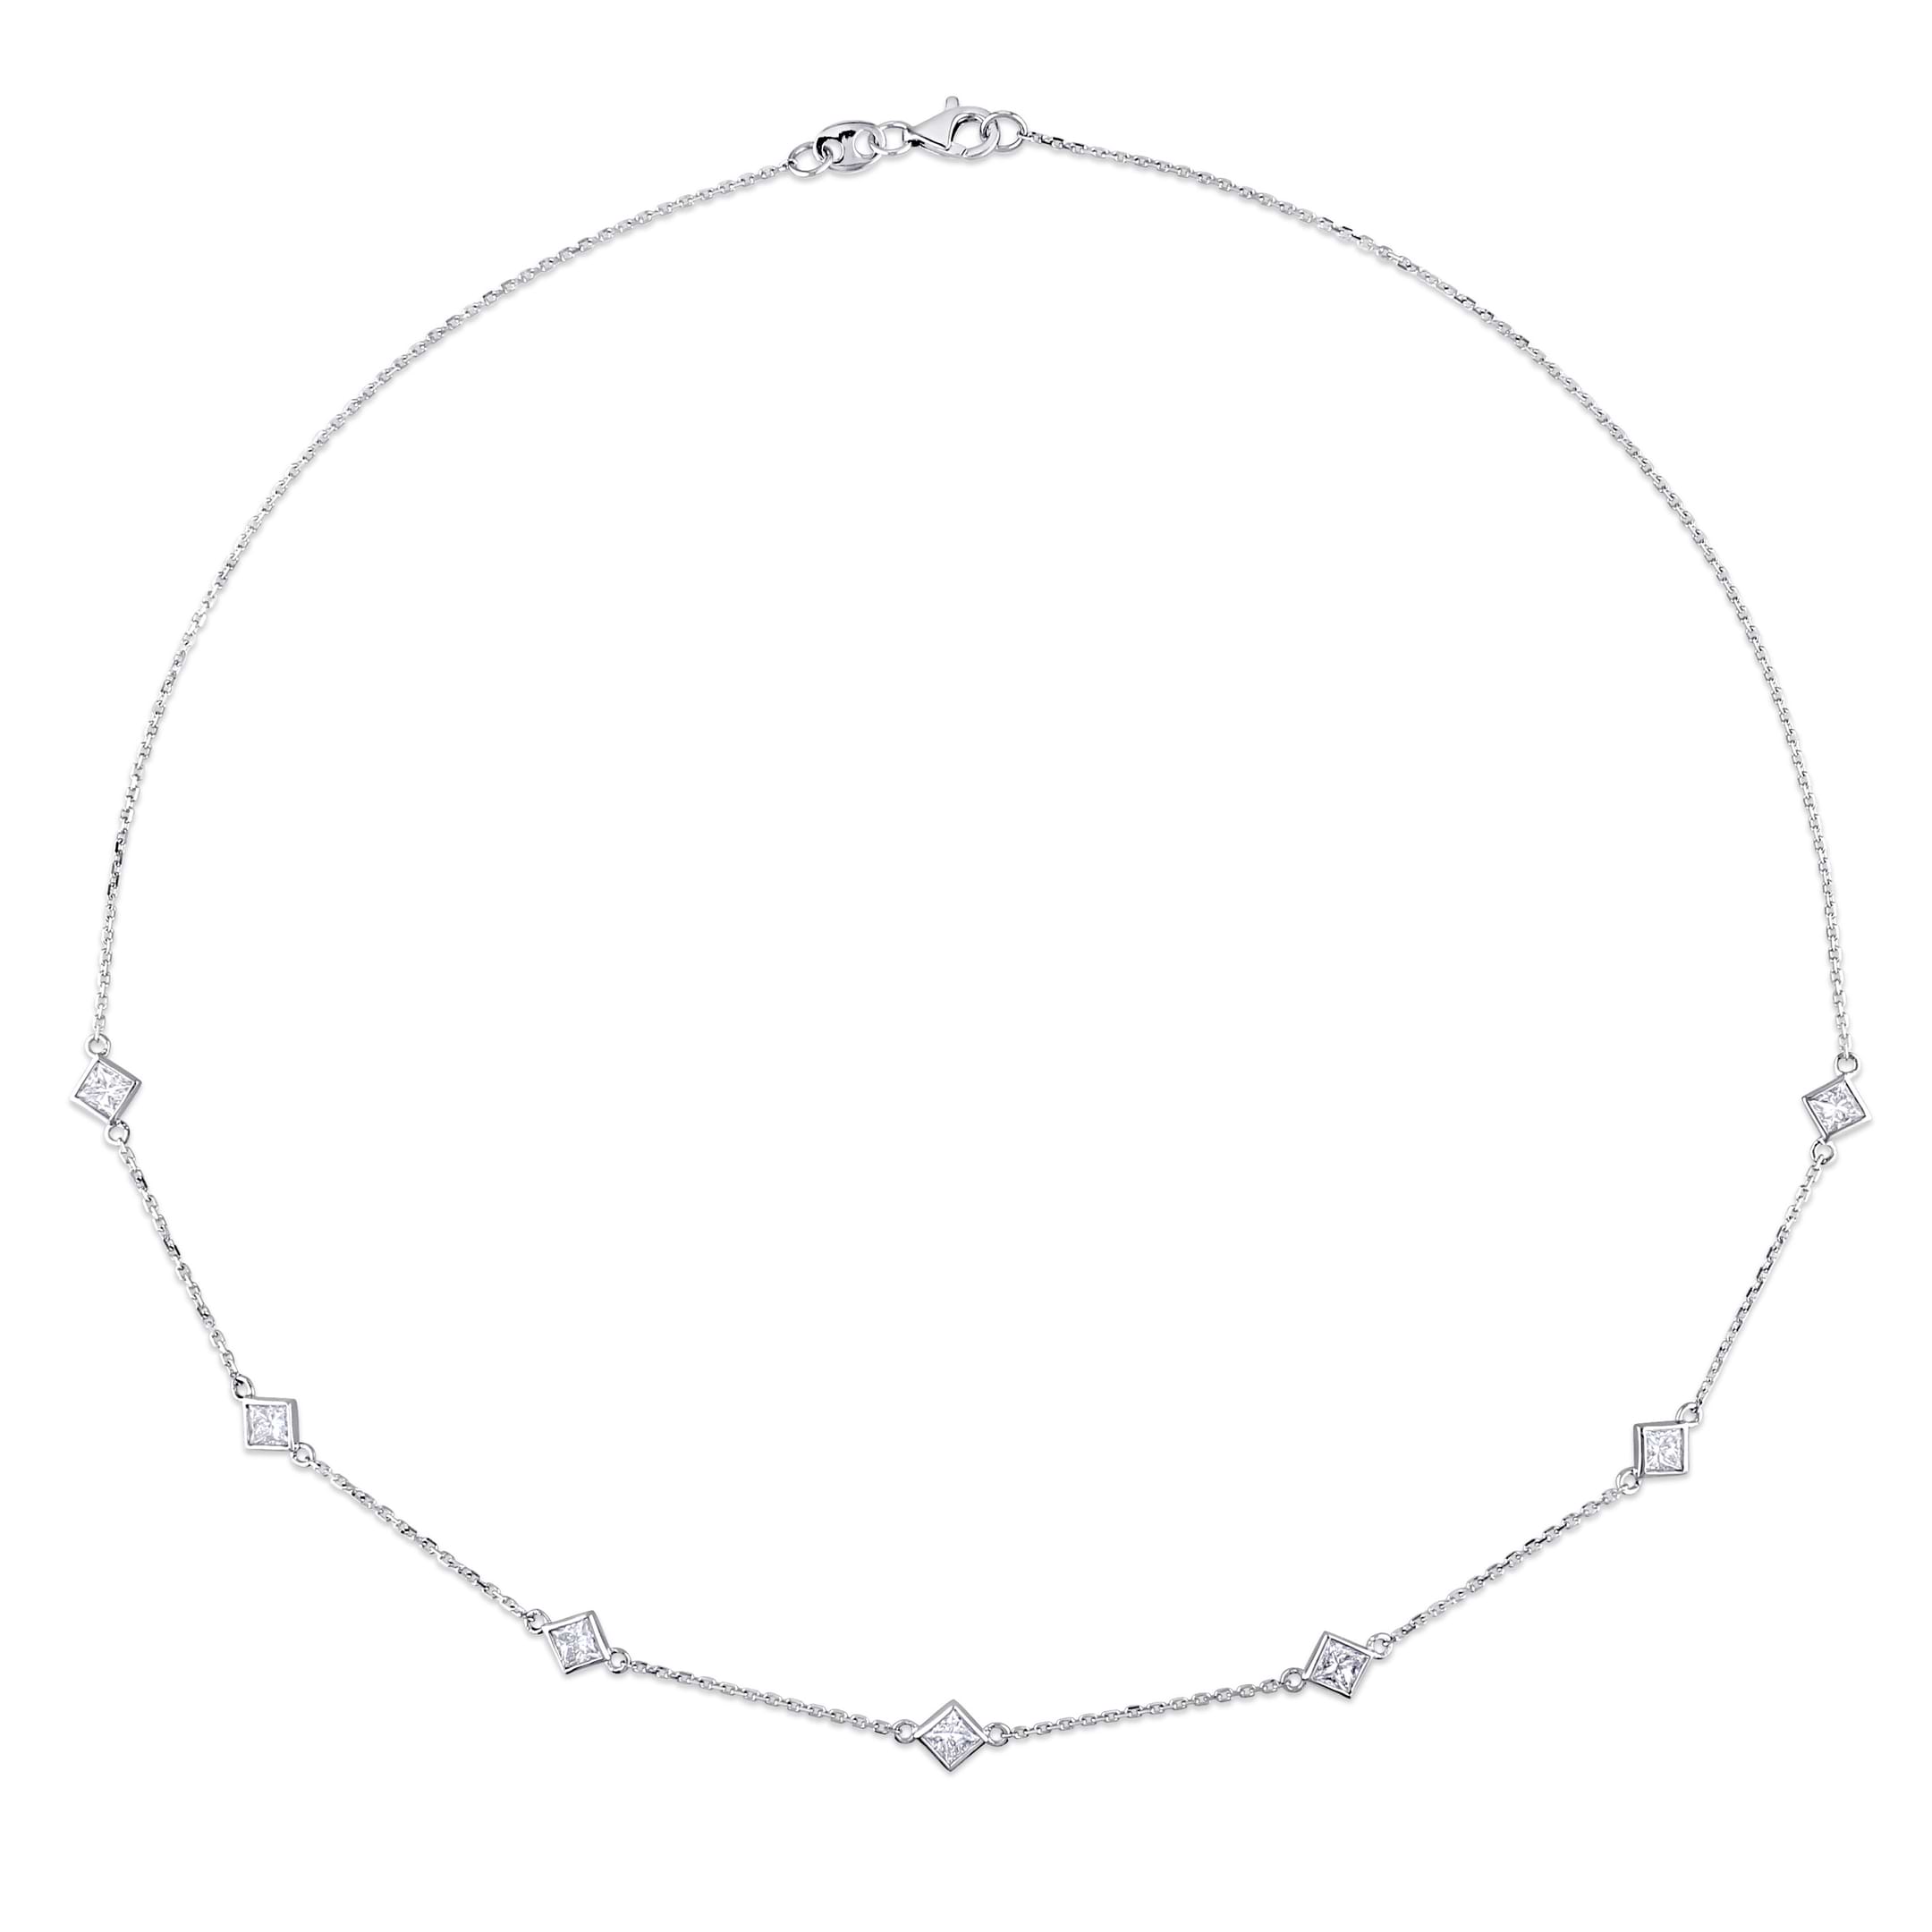 Princess Diamond Station Necklace 14k White Gold (1.25ct)